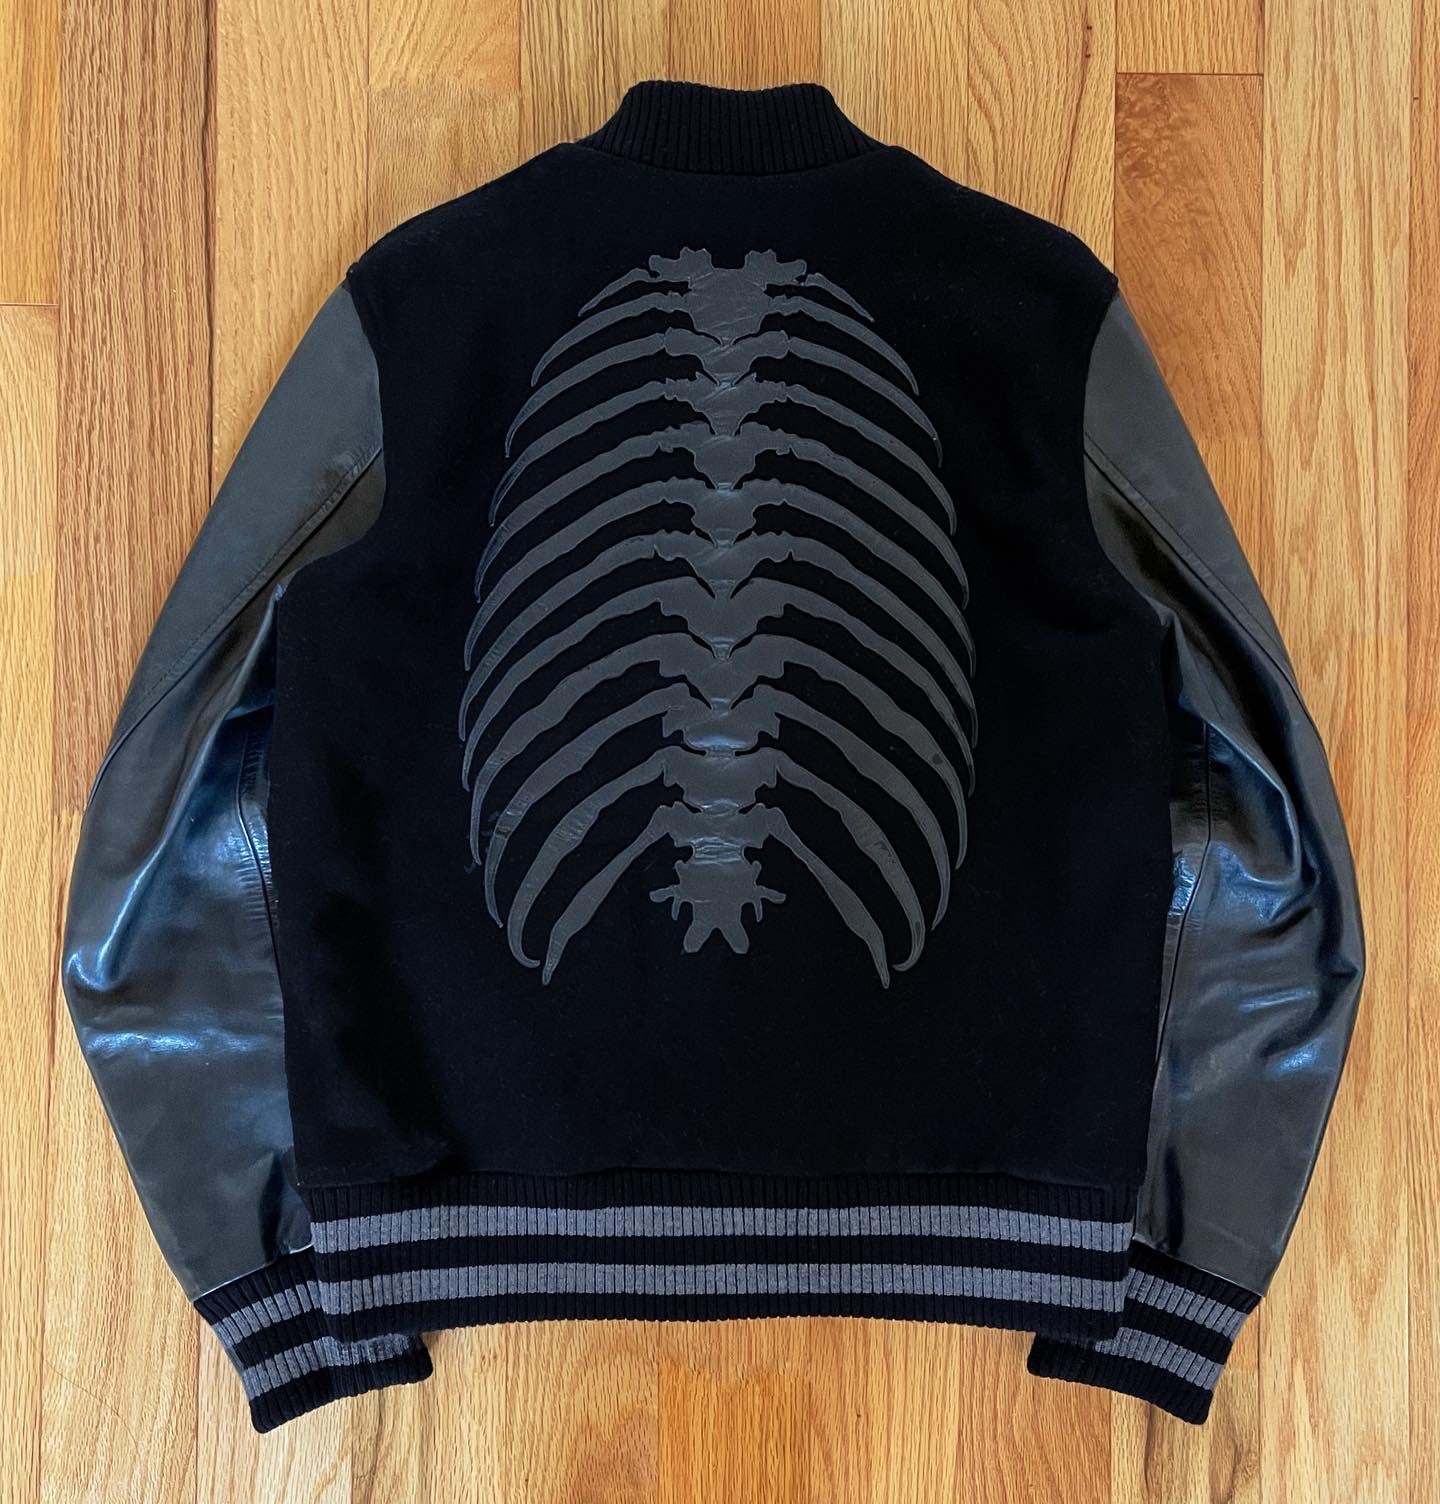 AW2013 Undercover Anatomicouture Spine Leather Jacket – Alex Maxamenko